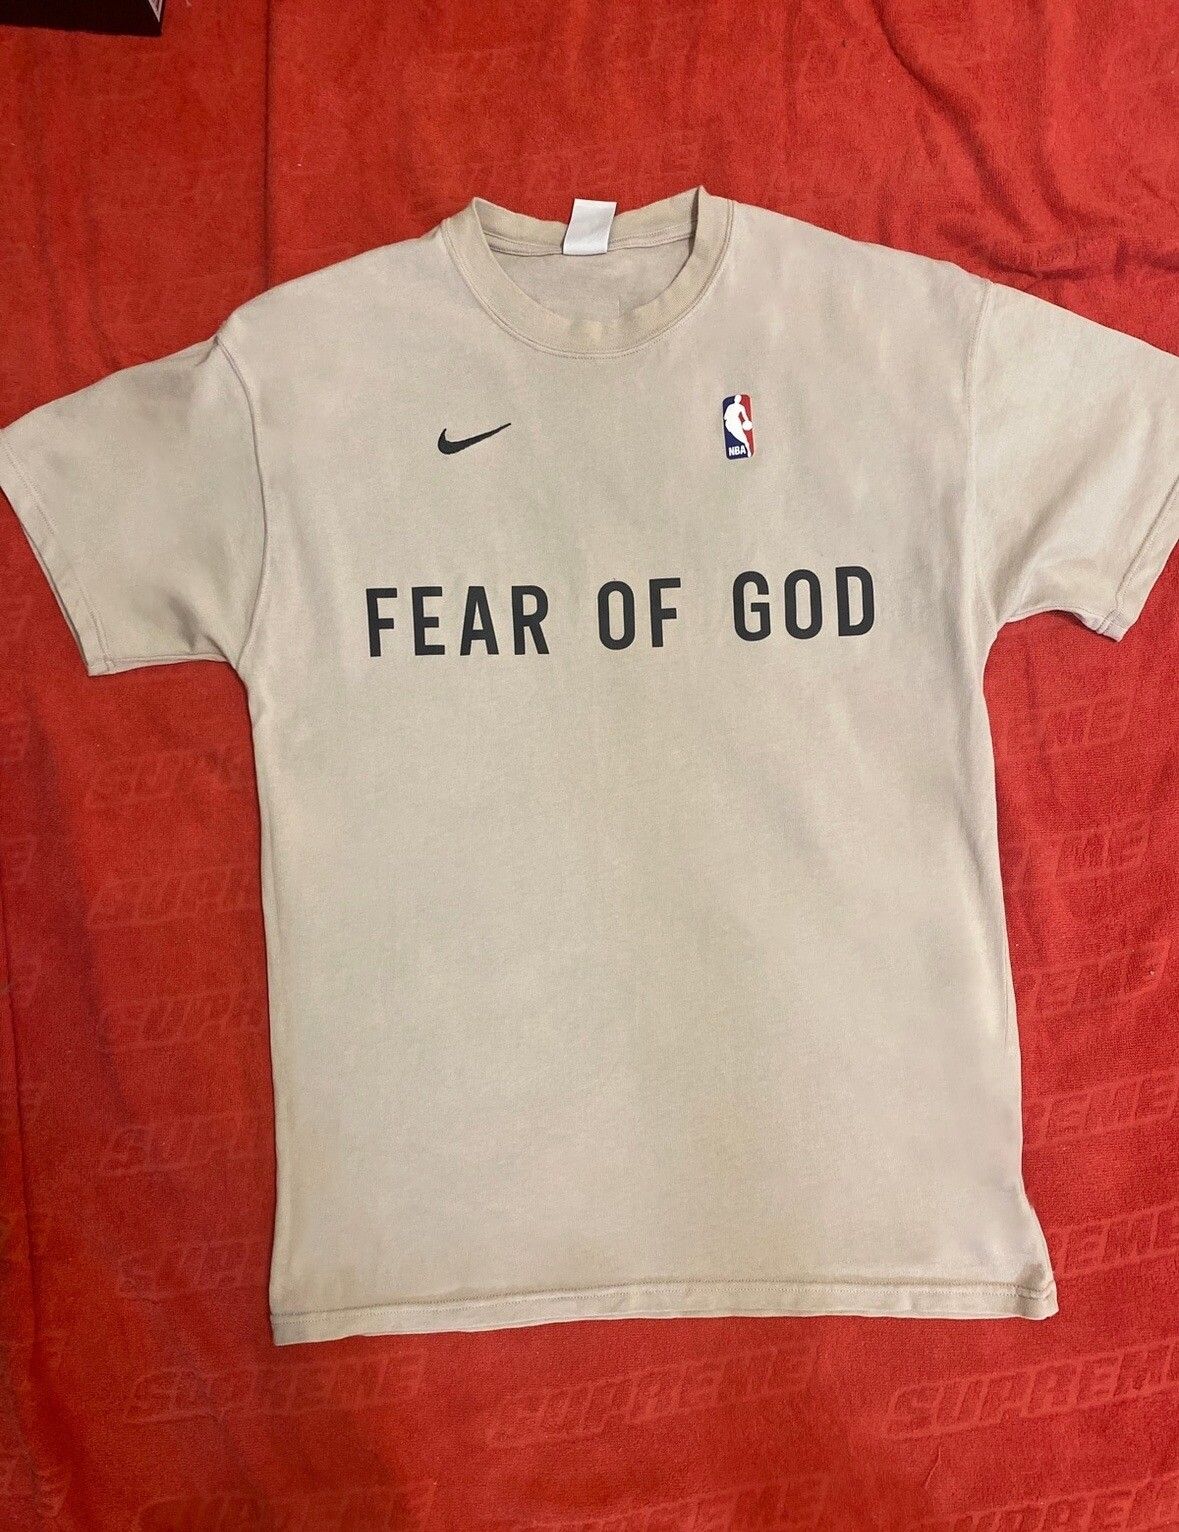 Nike Fear of God x Nike NBA Tshirt | Grailed